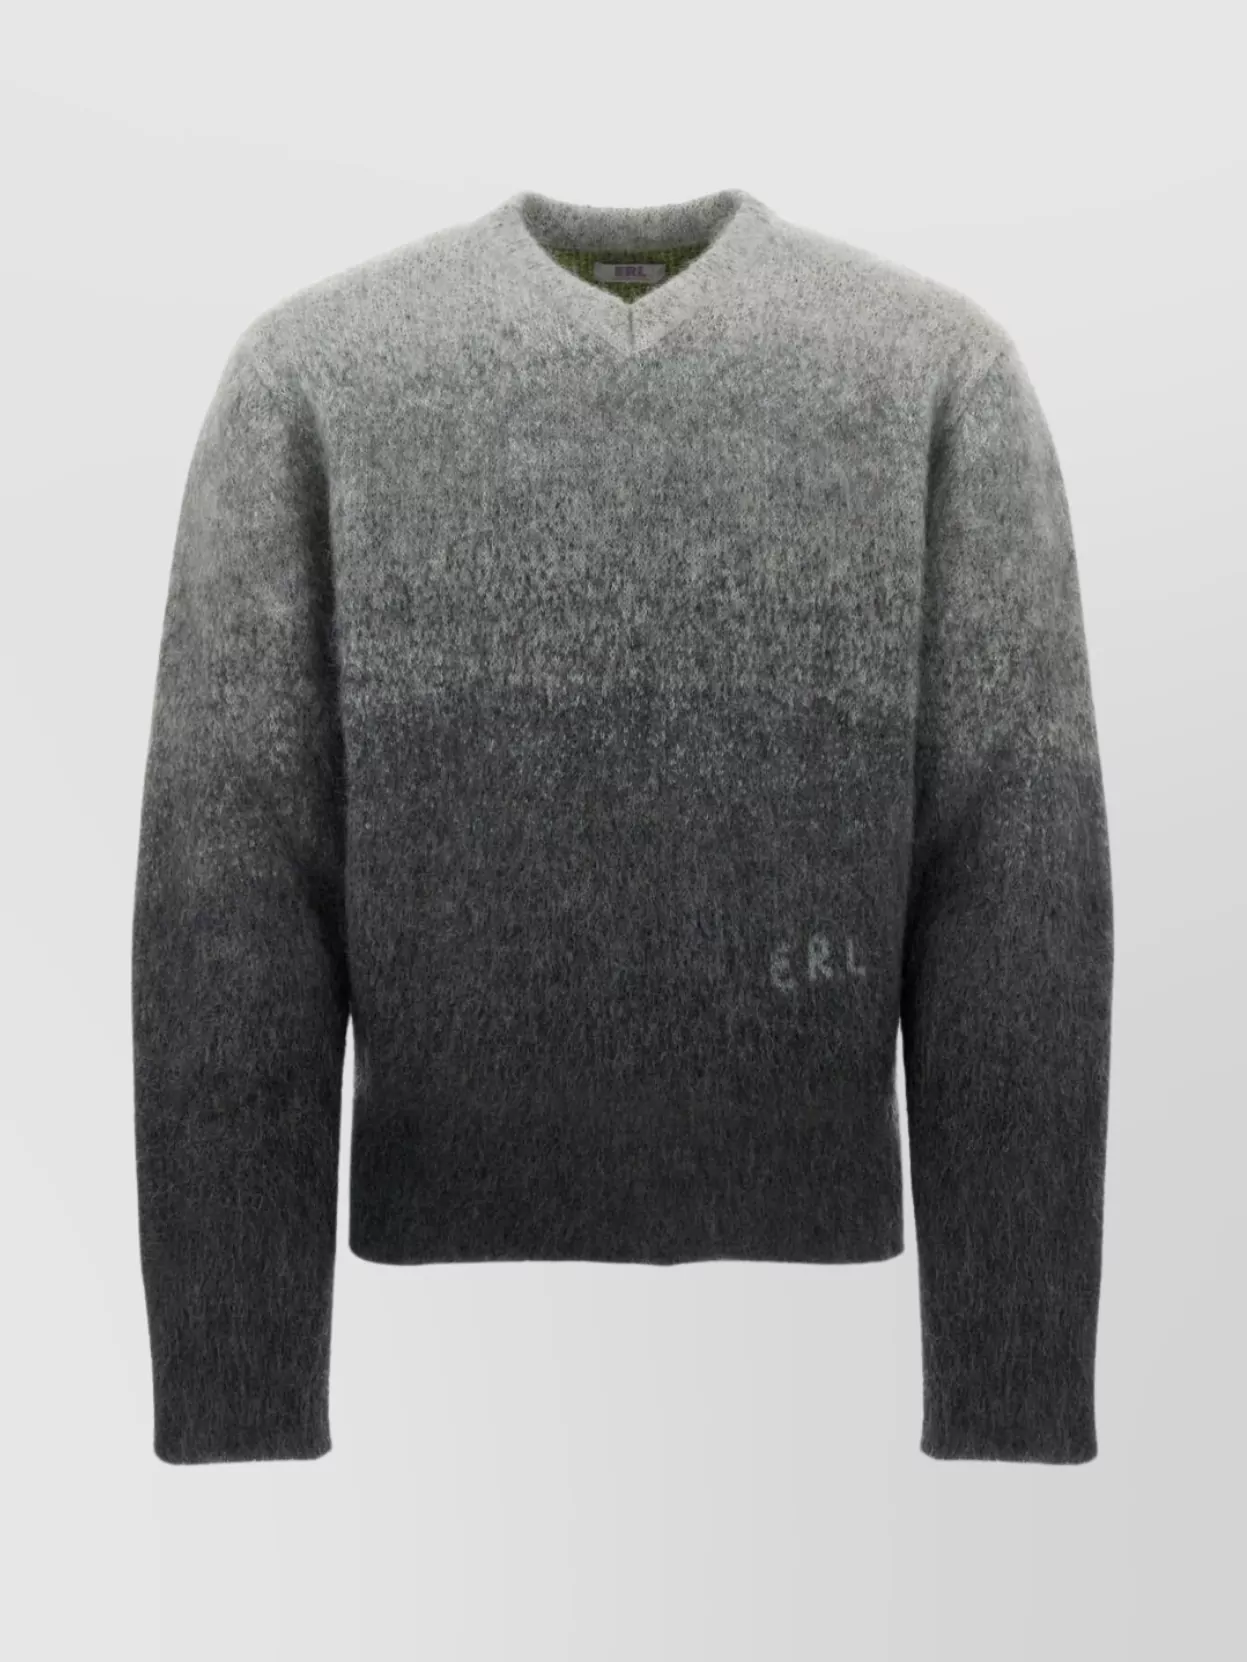 Shop Erl Crew Neck Mohair Blend Sweater